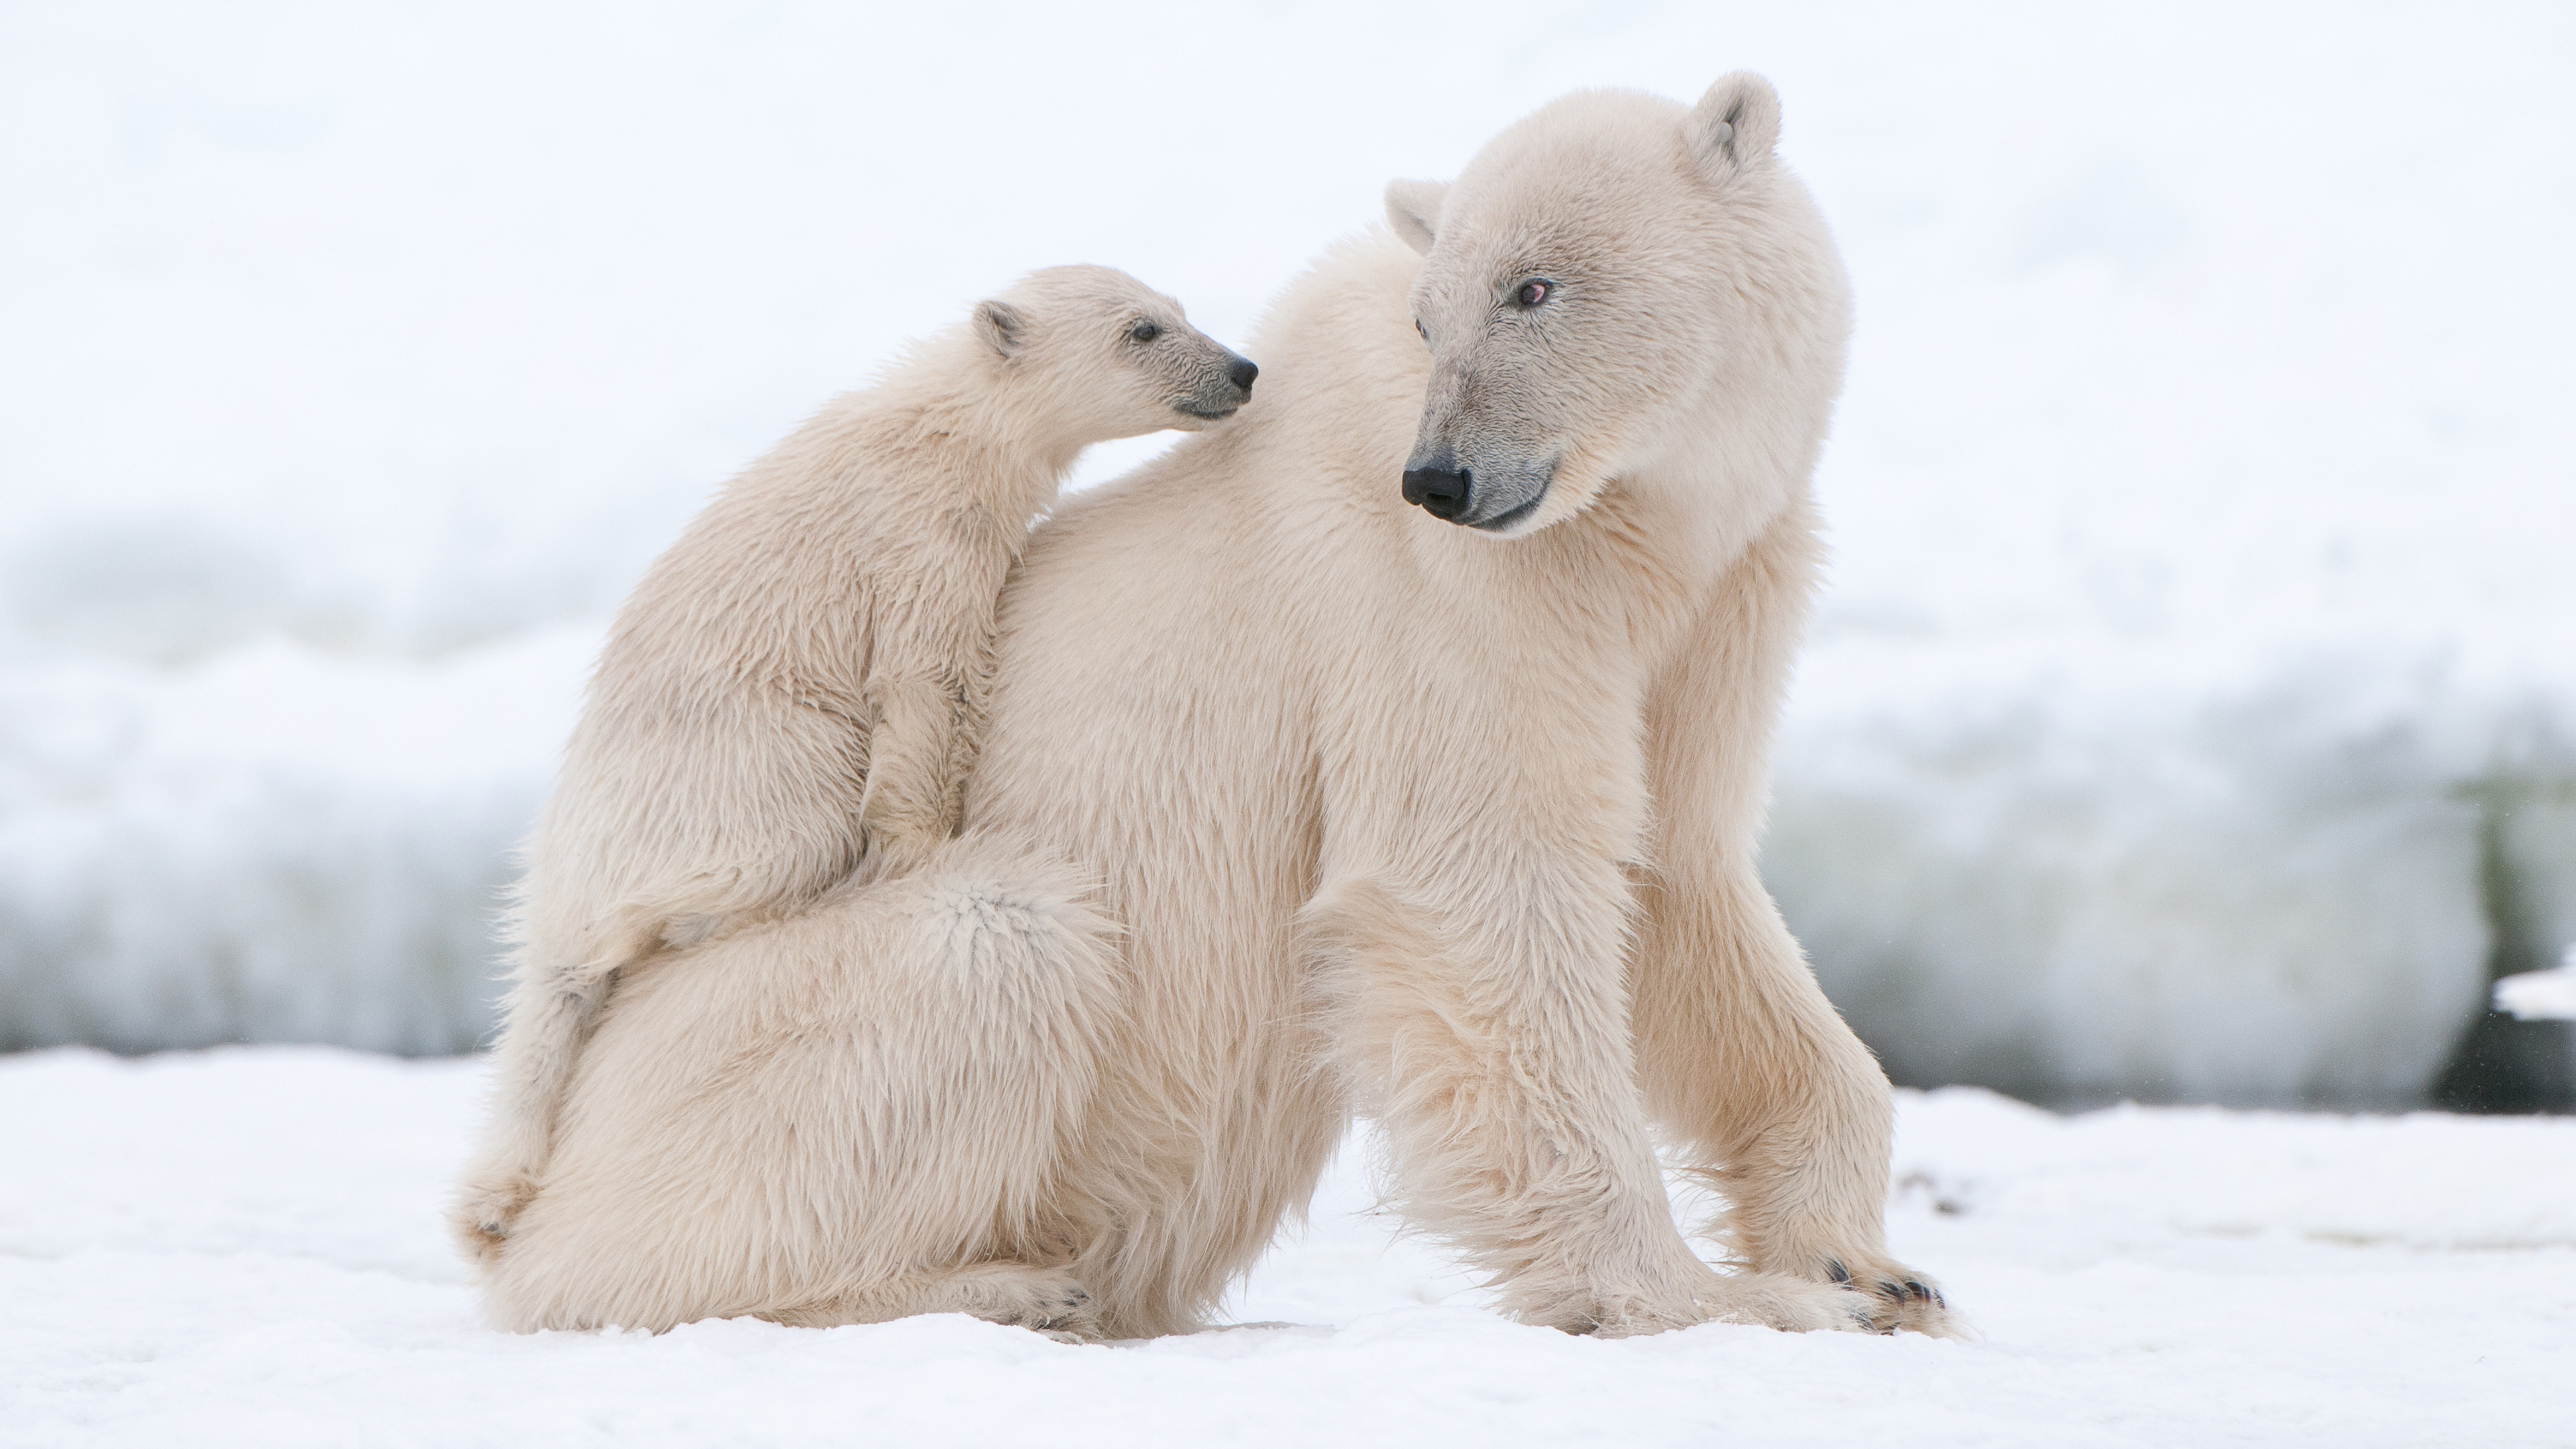 Snowy bear wallpaper, Winter wilderness, Arctic charm, Snow-capped beauty, 3840x2160 4K Desktop